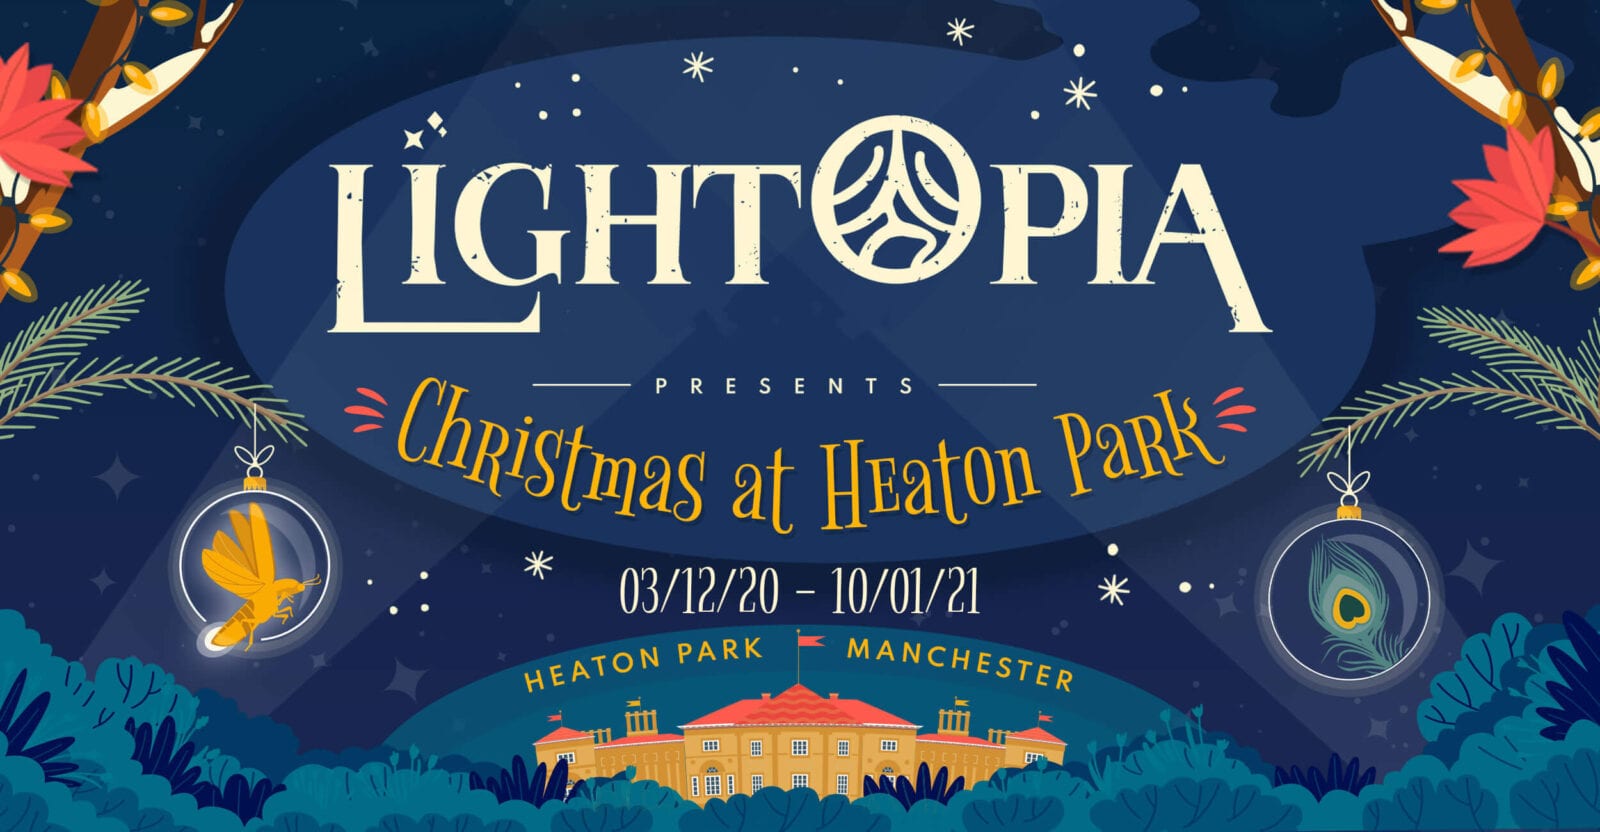 Lightopia will still go ahead in Heaton Park under Tier 3 restrictions next month, The Manc